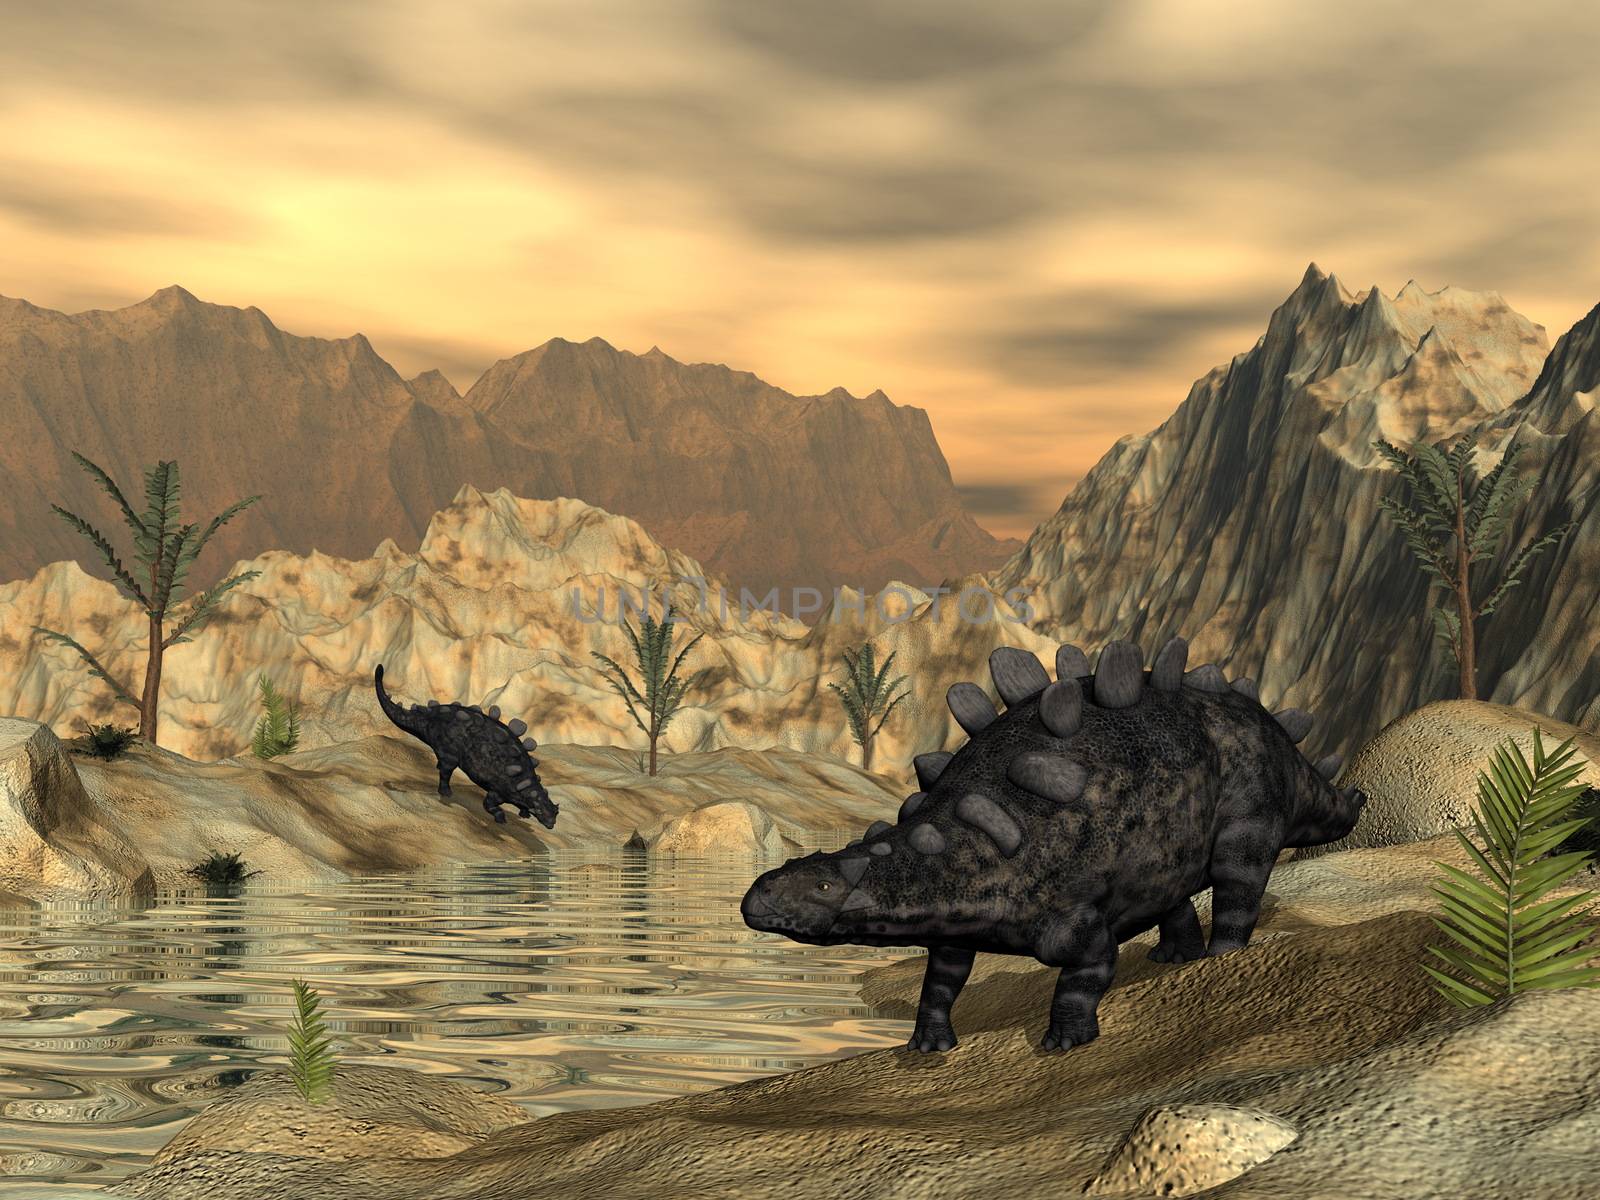 Chrichtonsaurus dinosaur next to a pond in the desert by sunset - 3D render